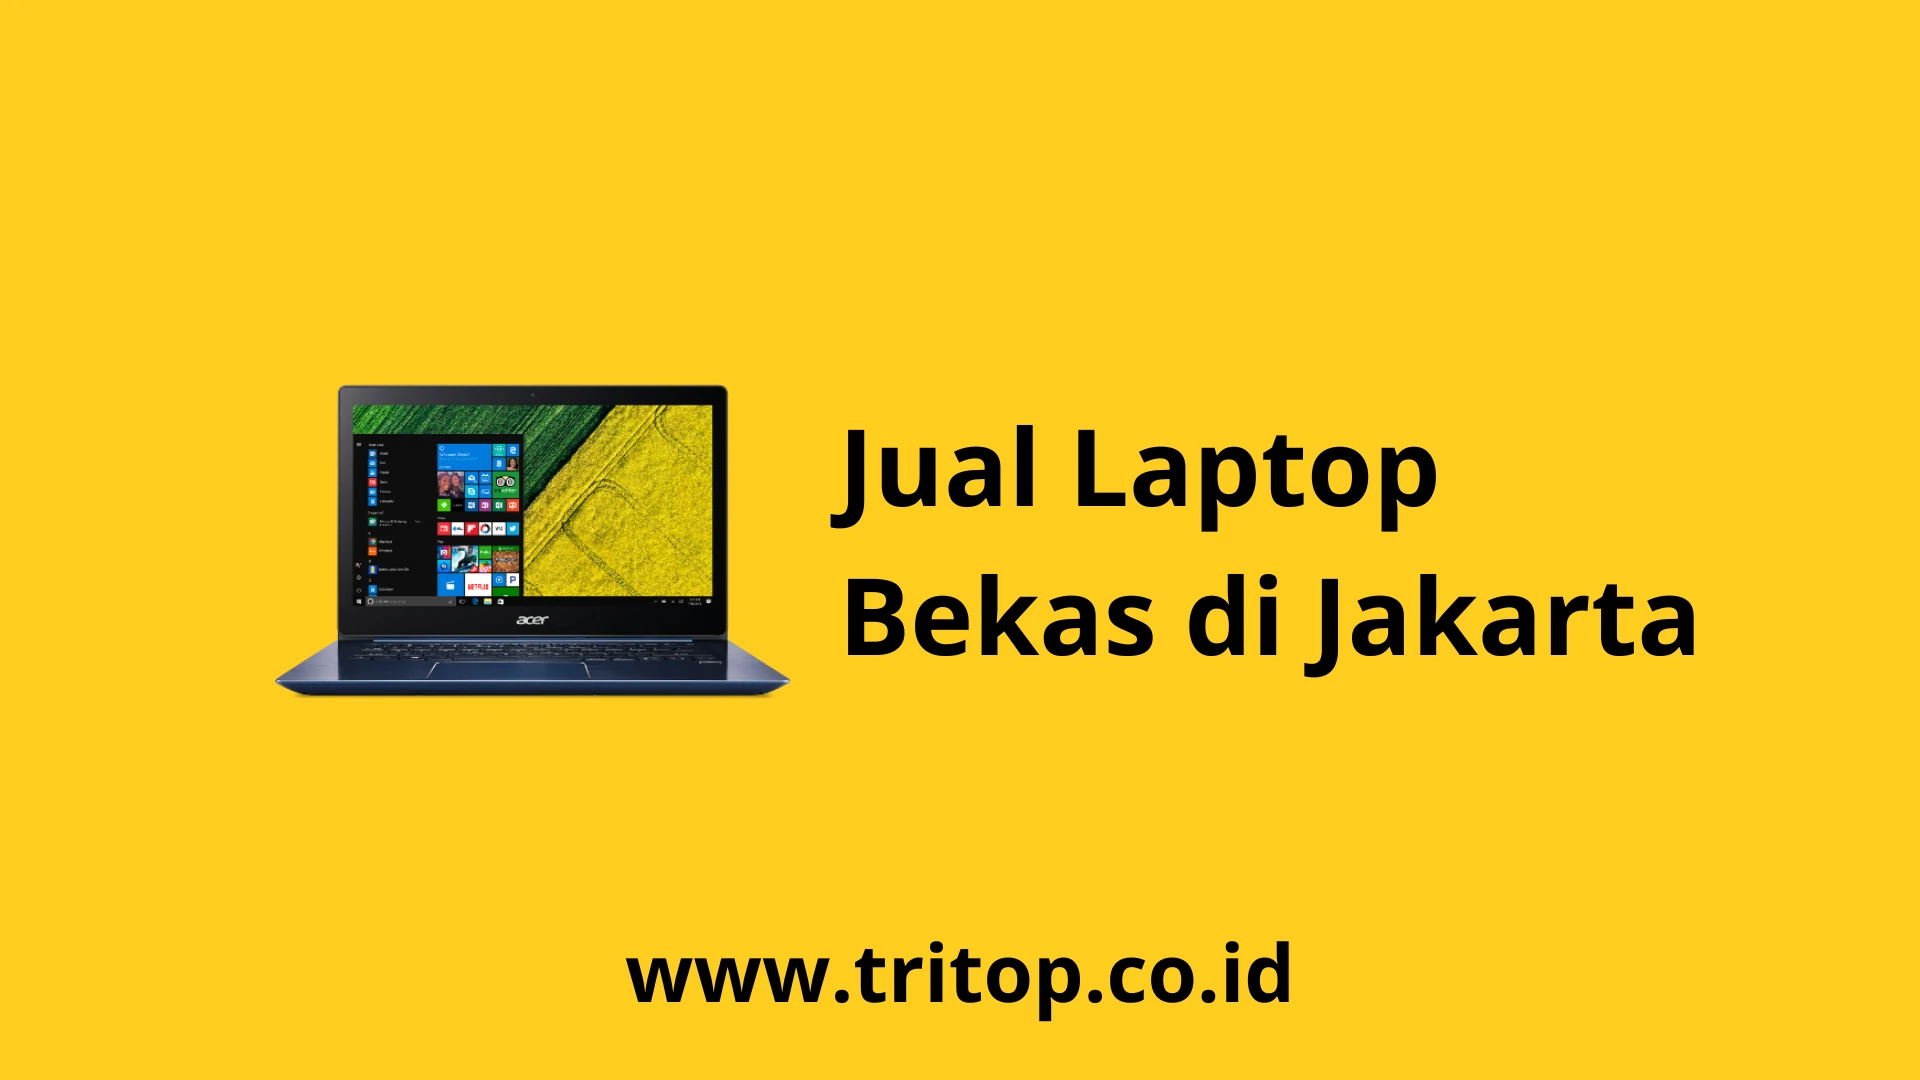 Jual Laptop Bekas di Jakarta